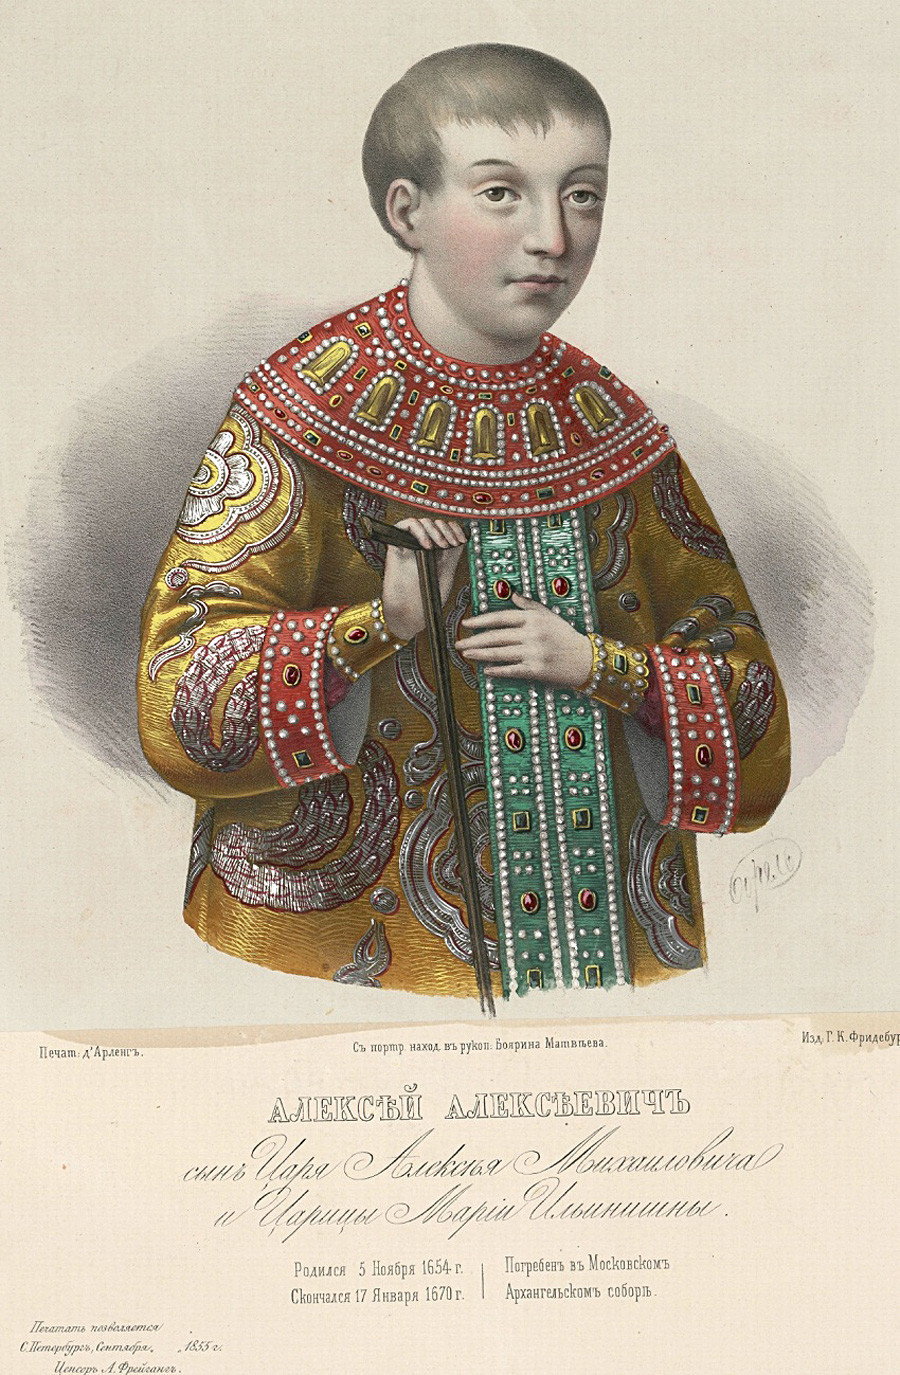 Aleixo da Rússia (1654-1670).